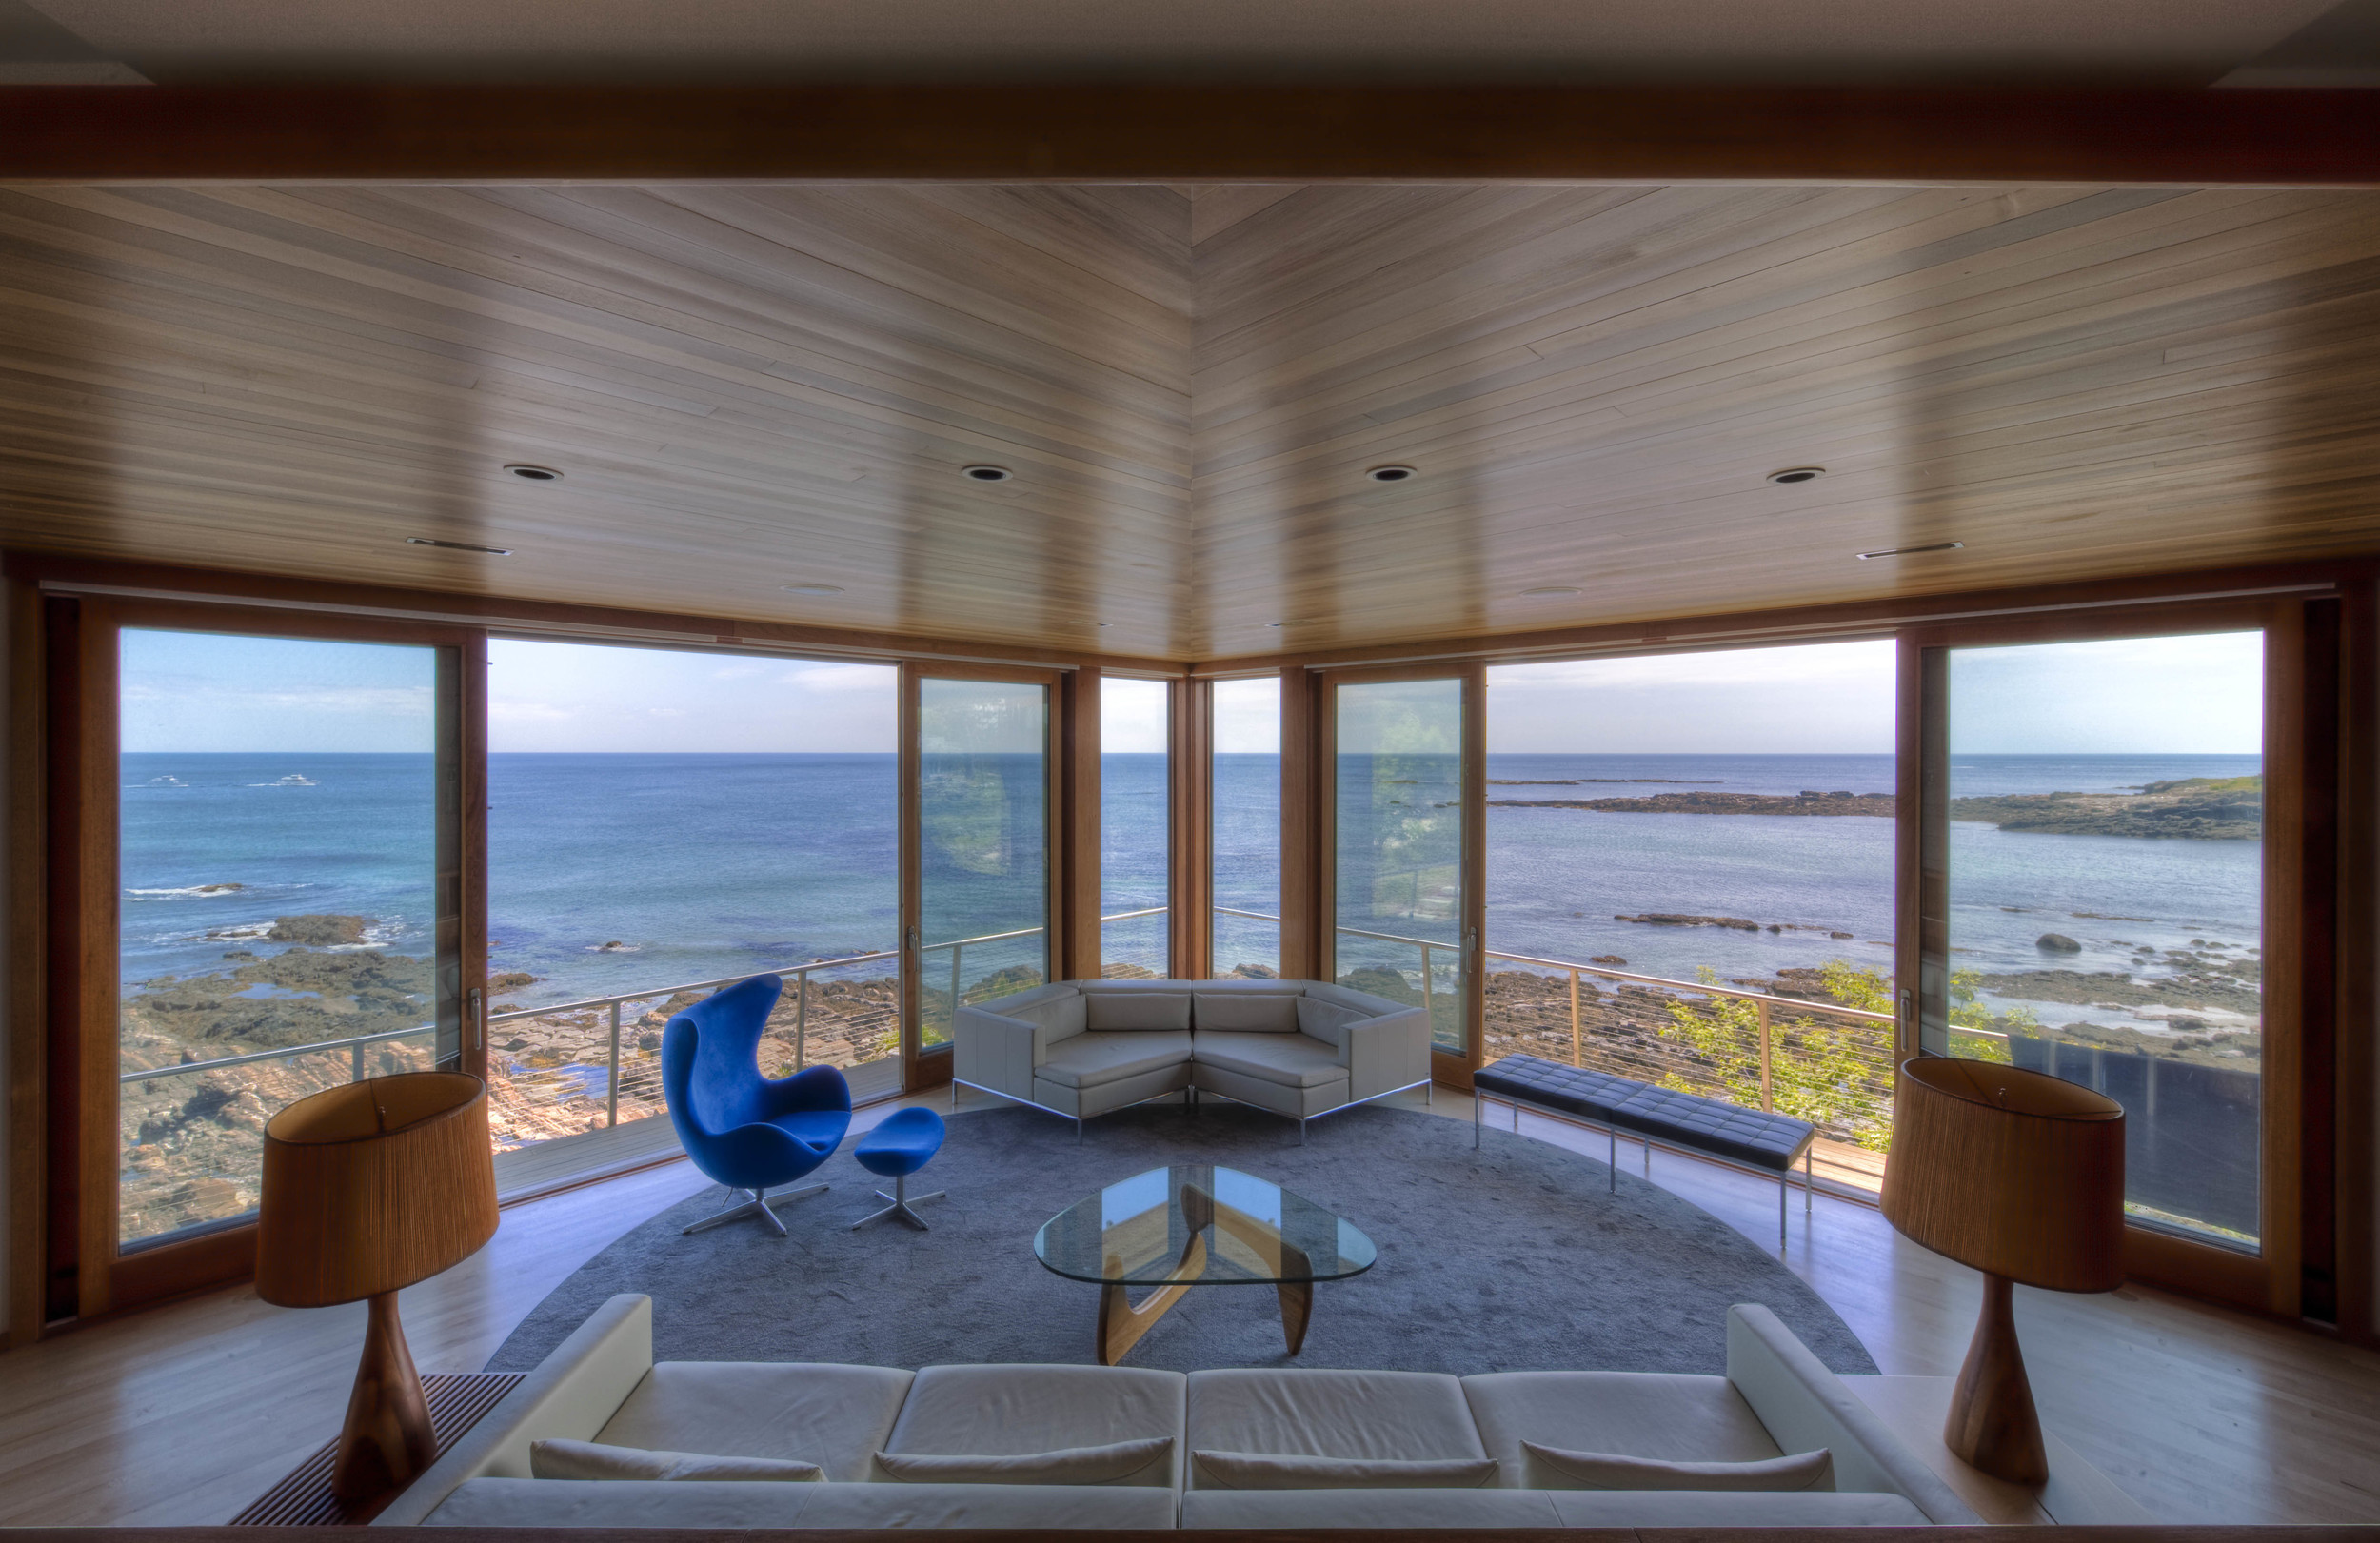  living room overlooking the coastline 